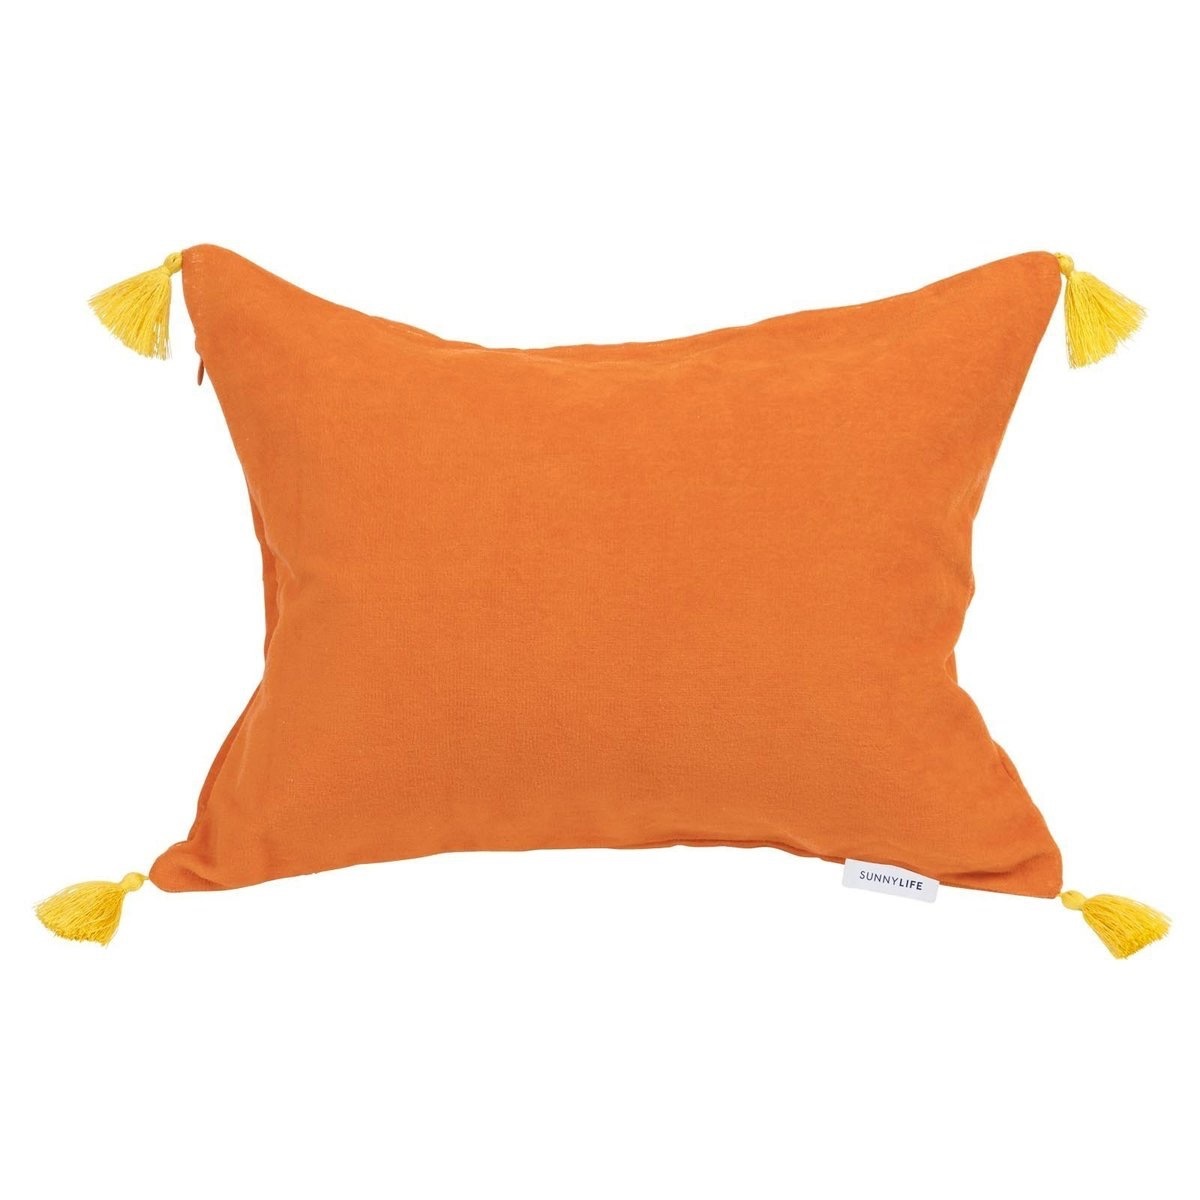 Sunnylife Orange Beach Pillow